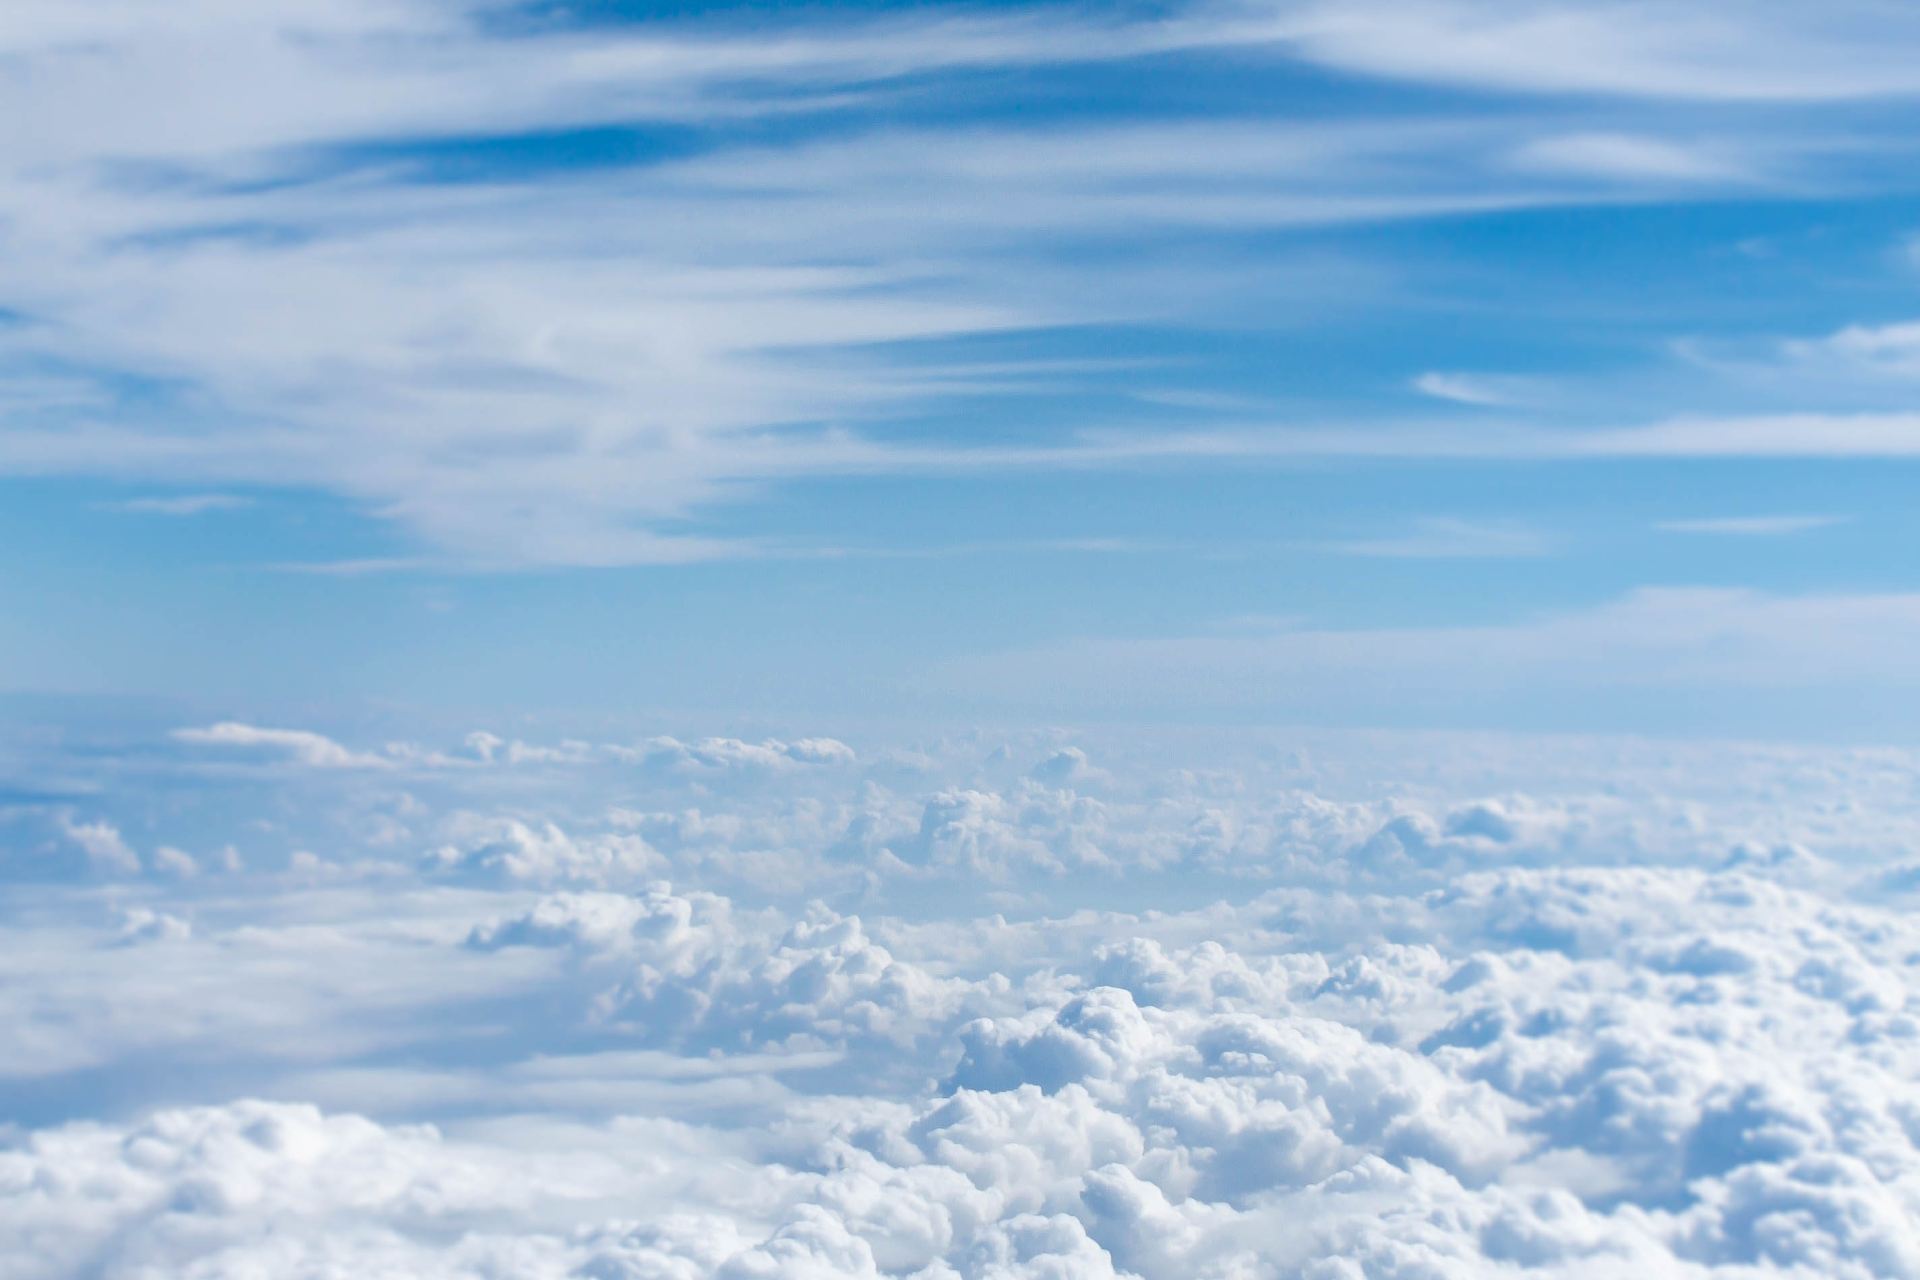 above-cloud photo of blue skies